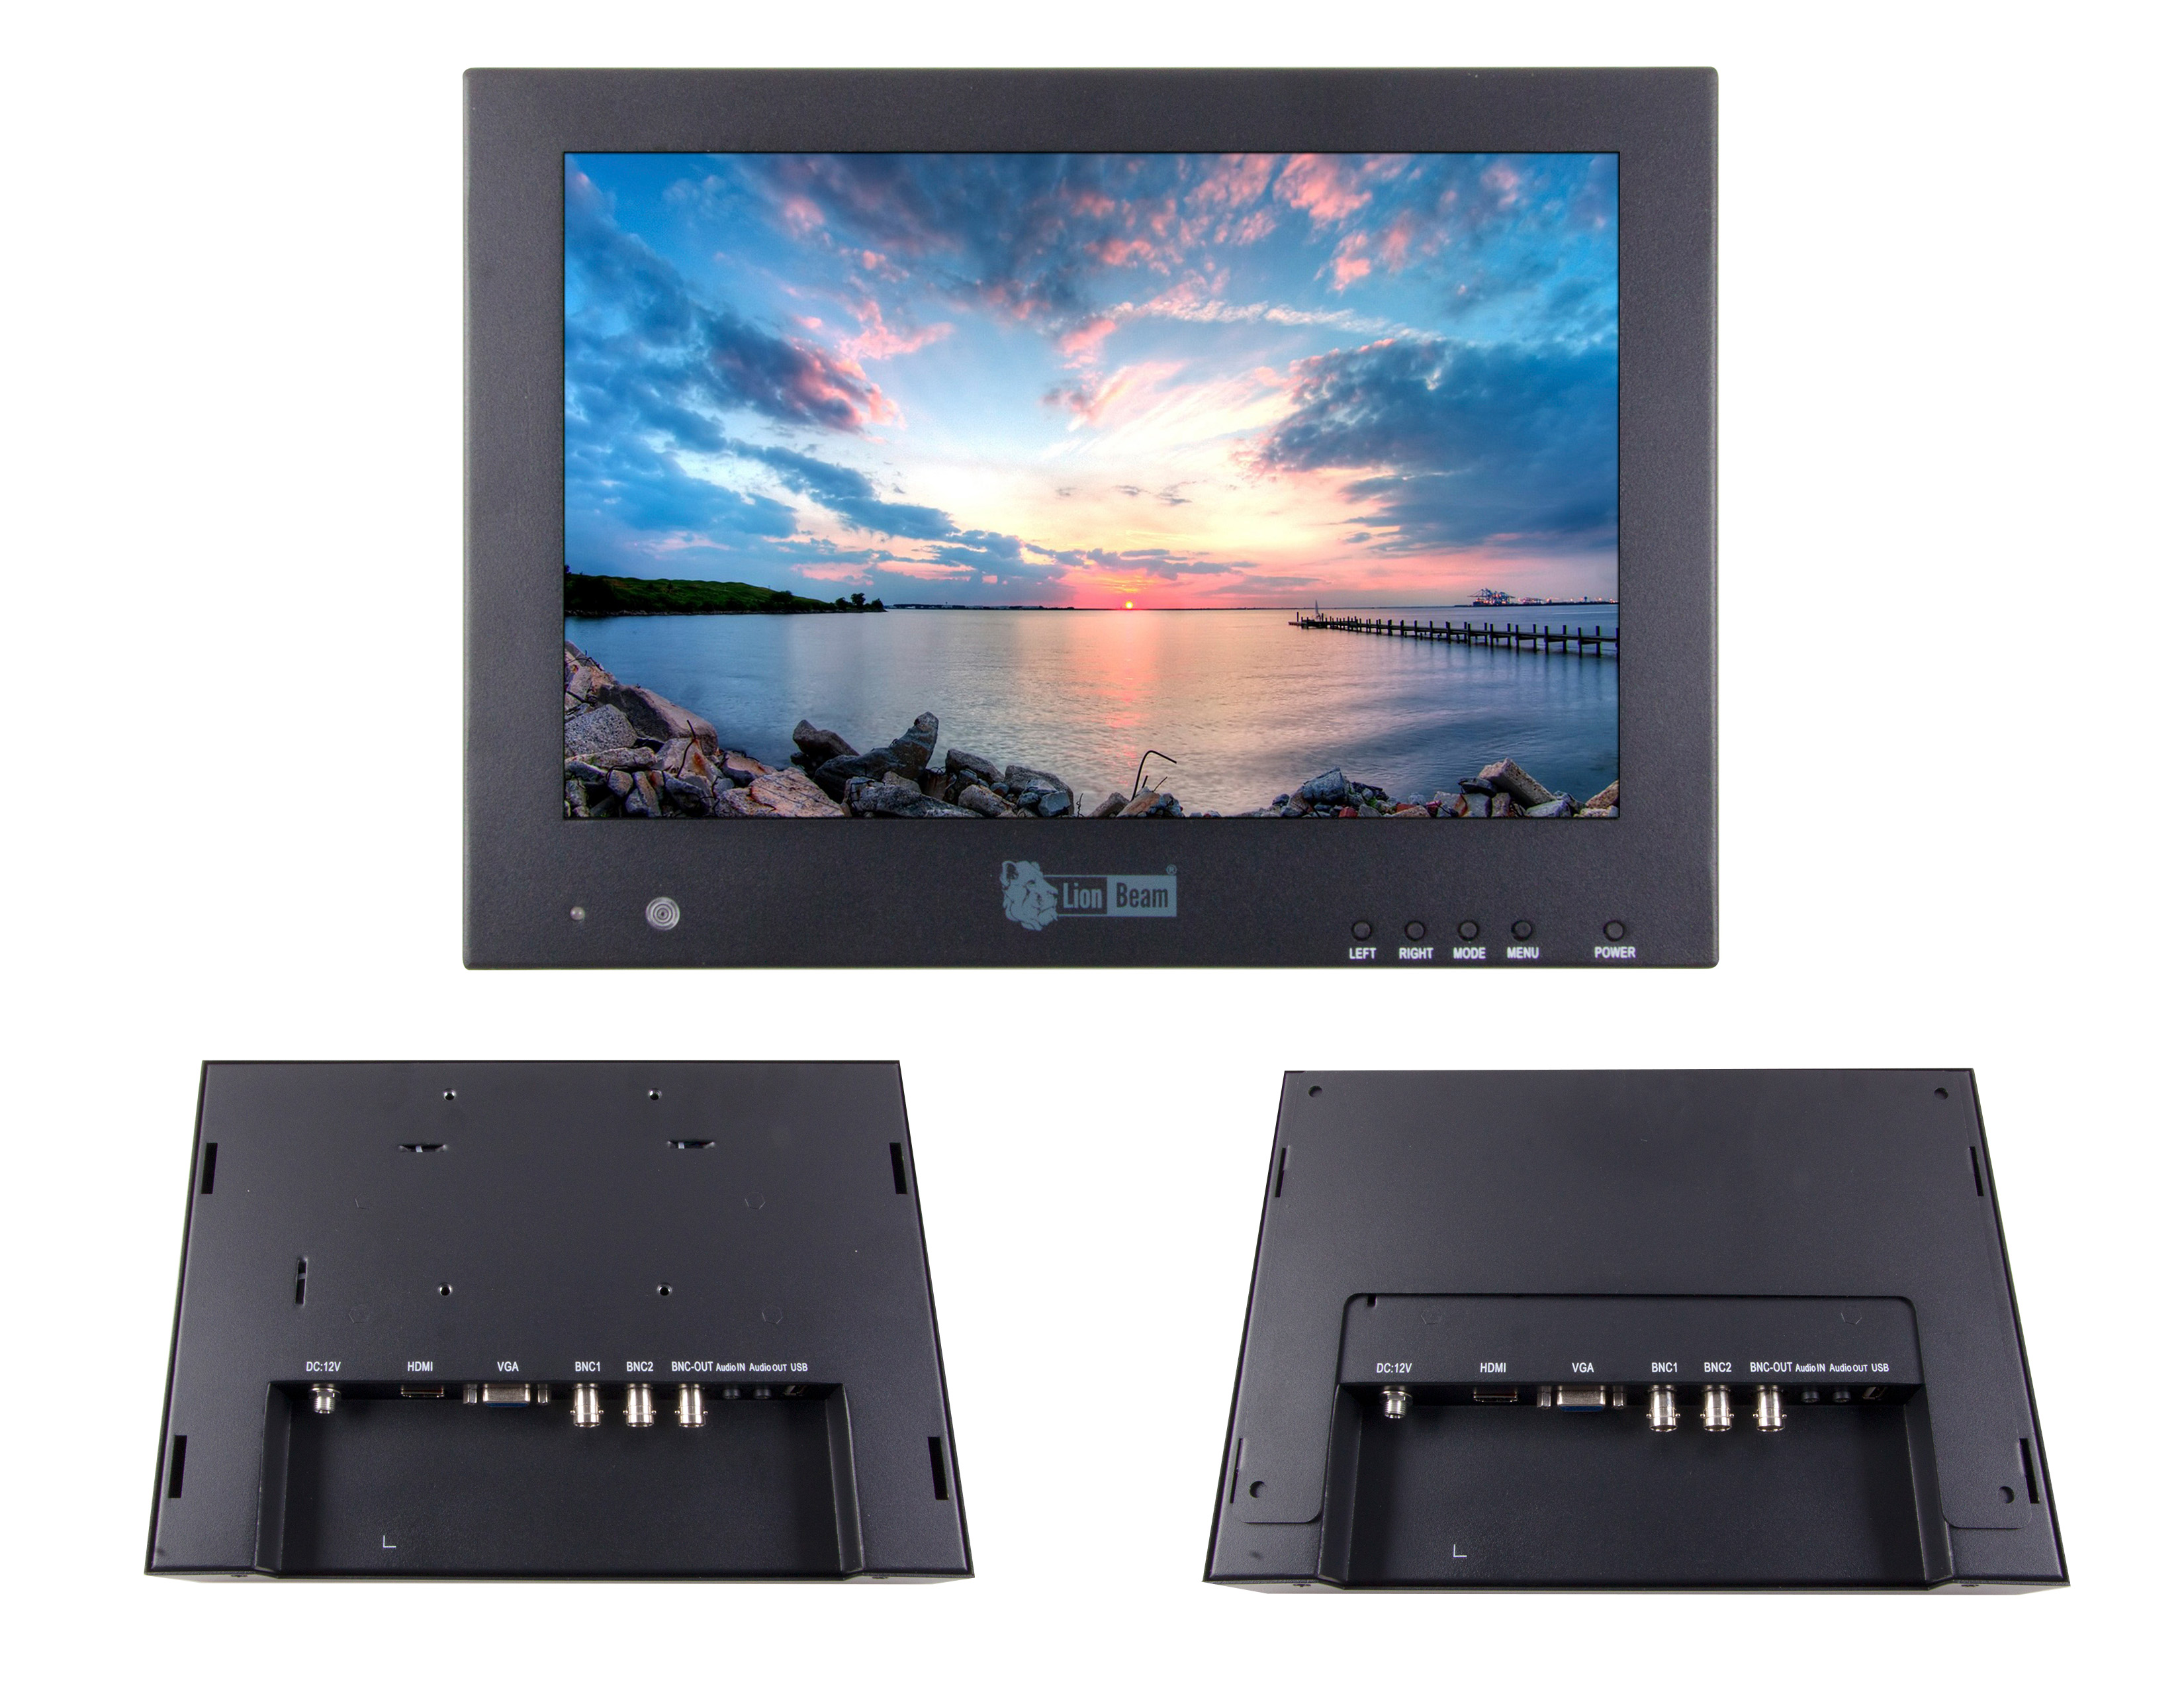 Monitor 10&quot; LED Surface Black HDMI,VGA,BNC W/Remote Control